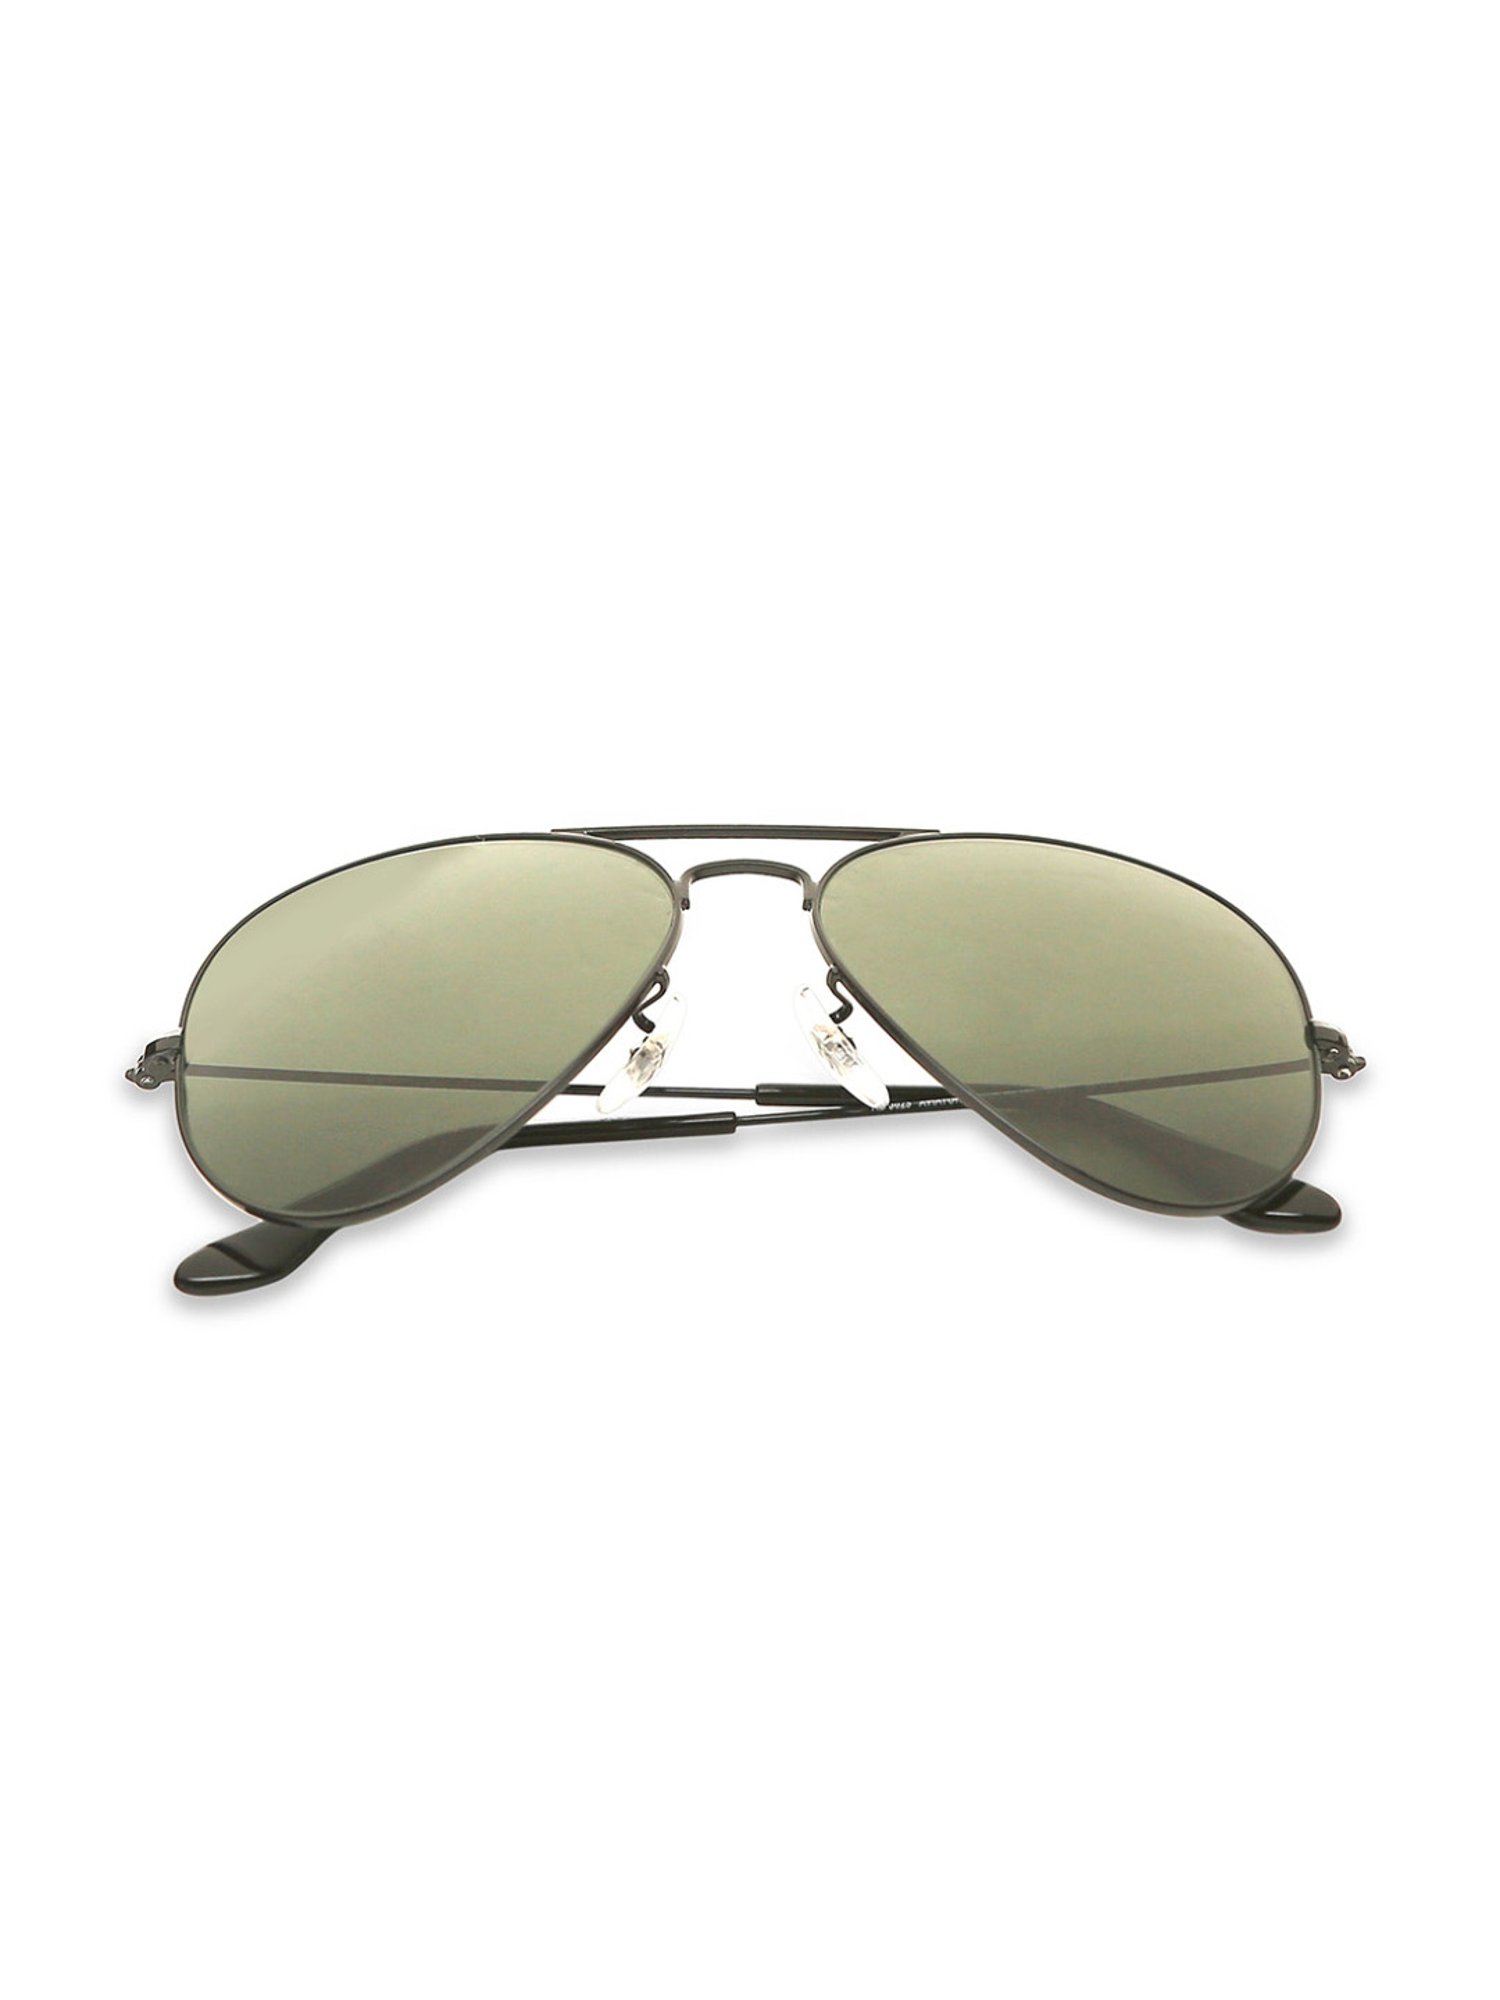 WC7752 - Aviator Sunglasses